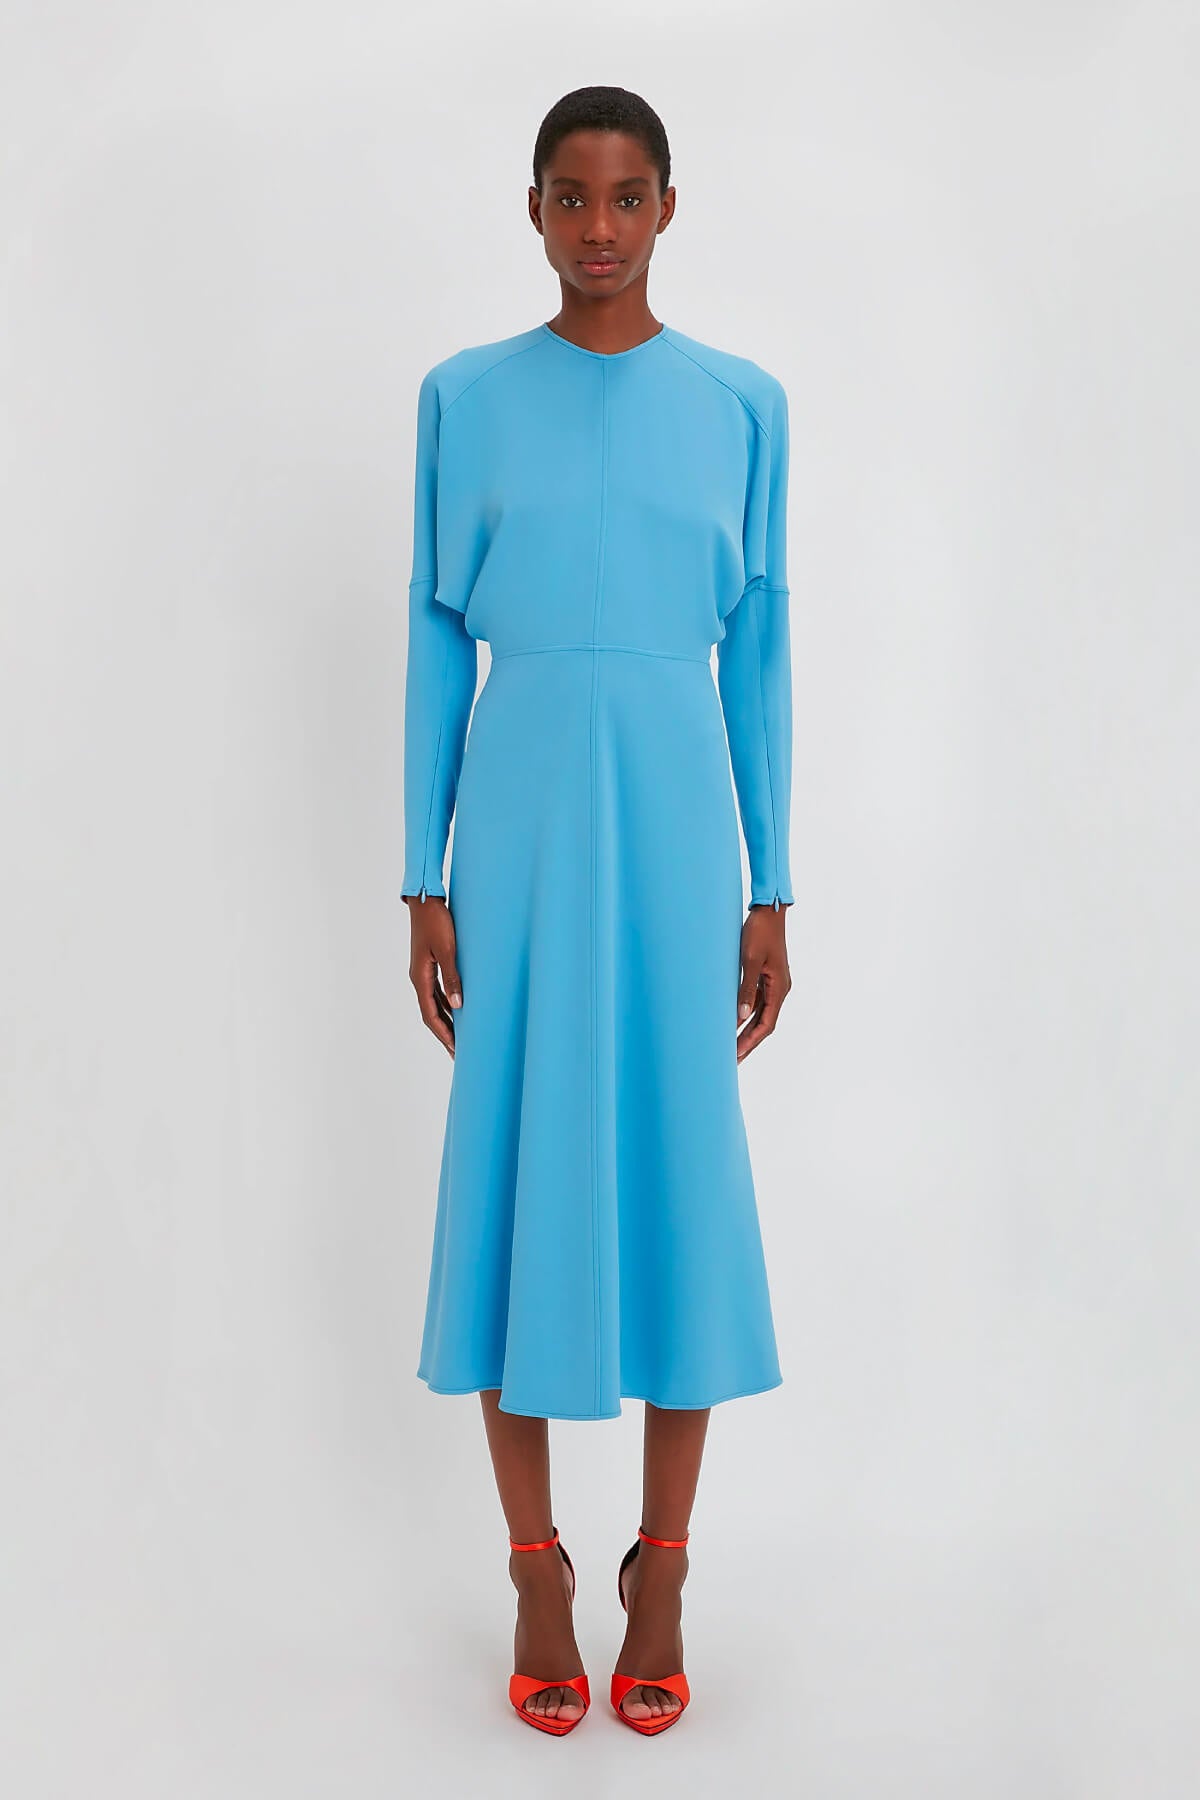 Victoria Beckham Dolman Midi Dress - Sky Blue